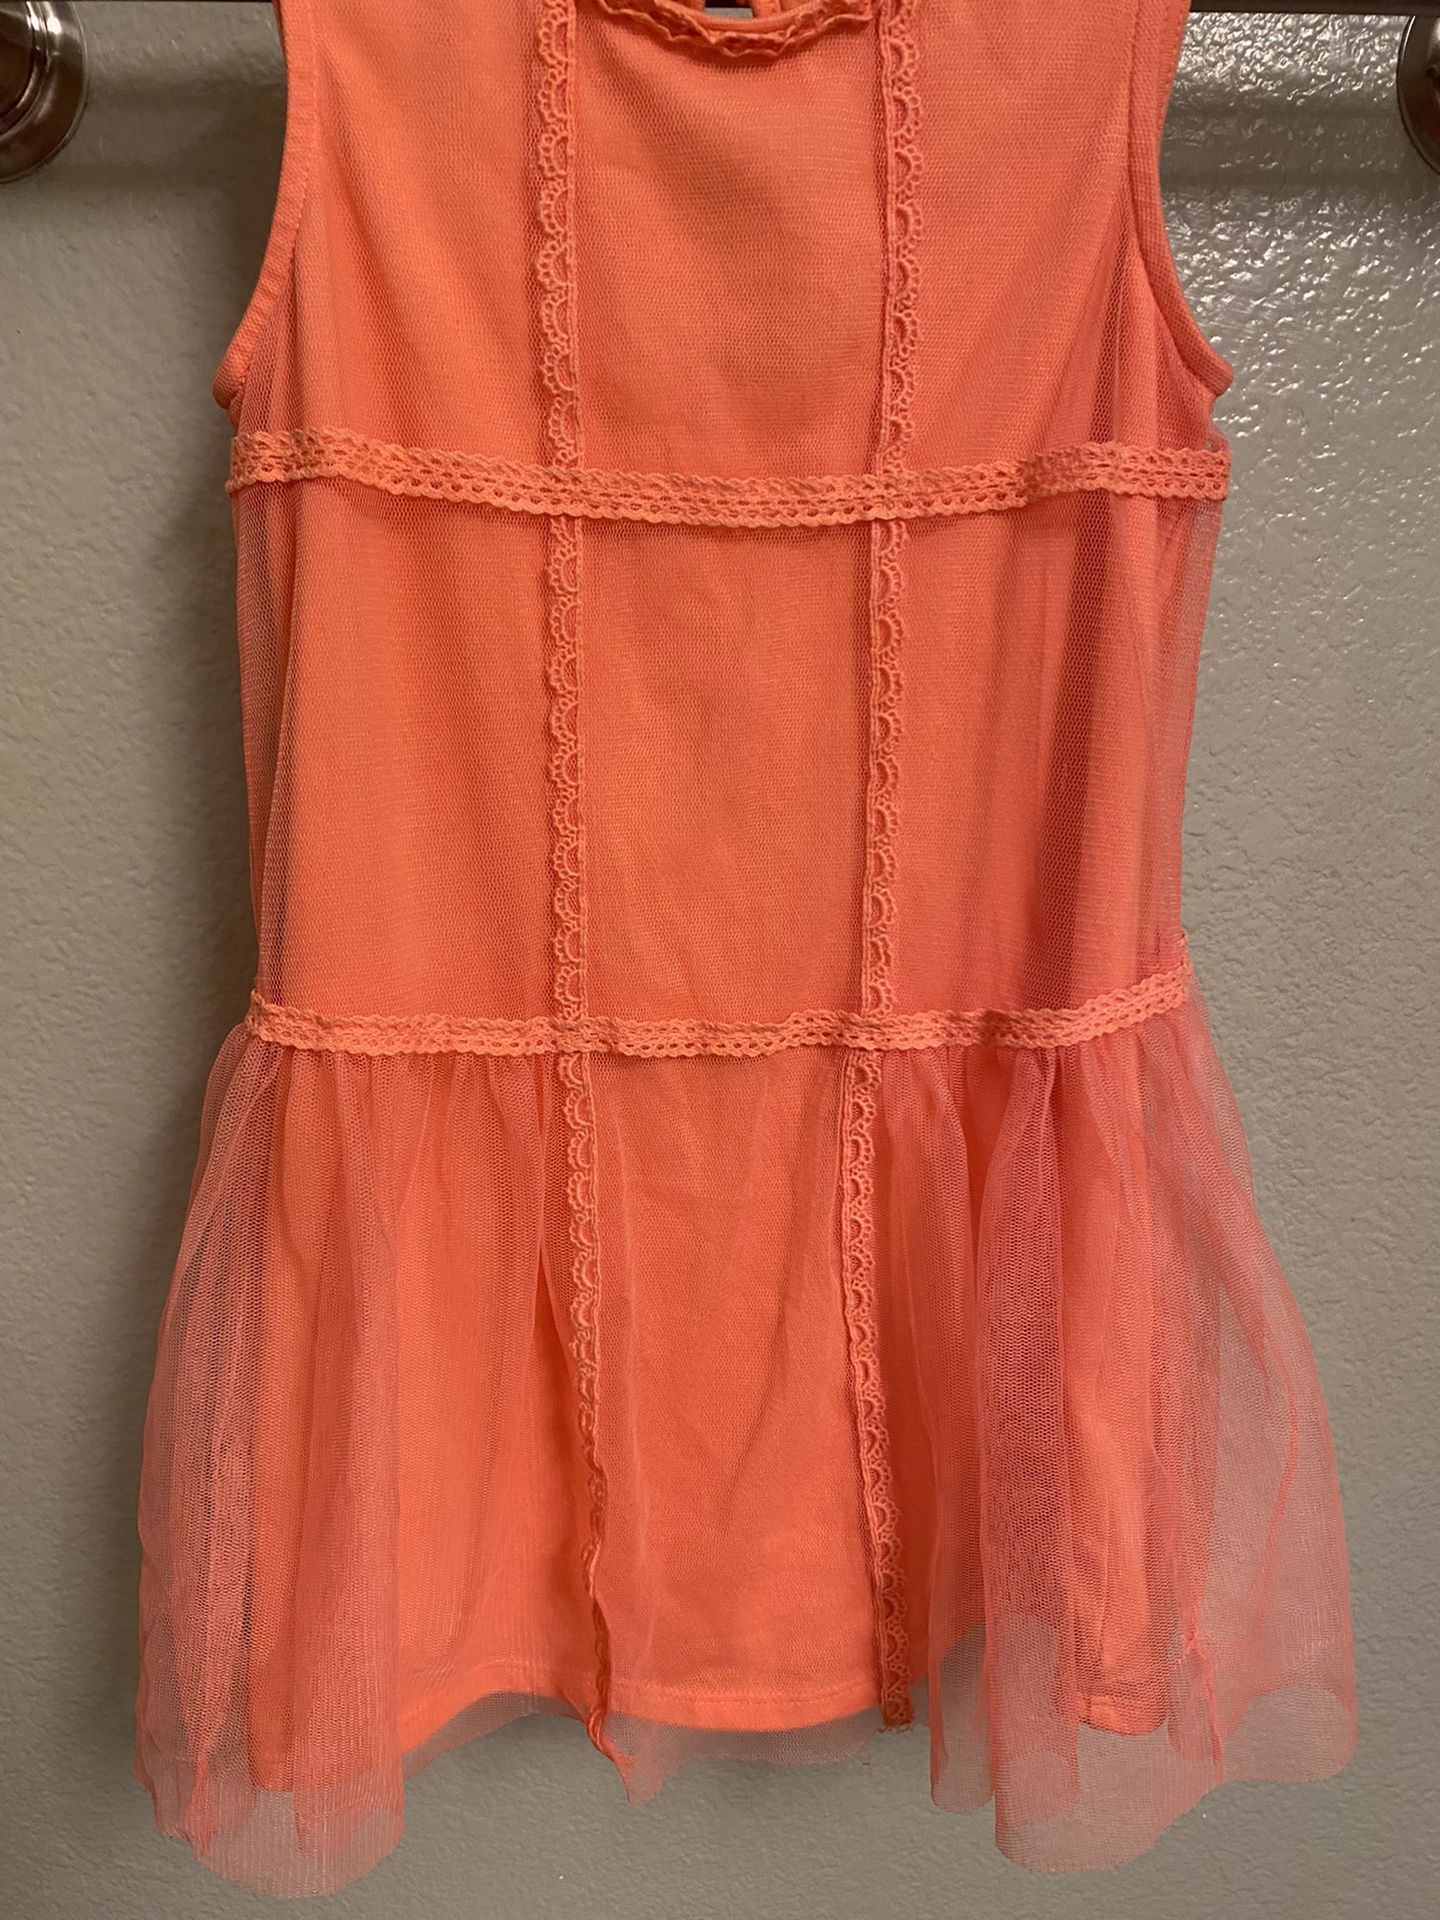 OshKosh Girls Tutu Dress Tangerine Size 5T